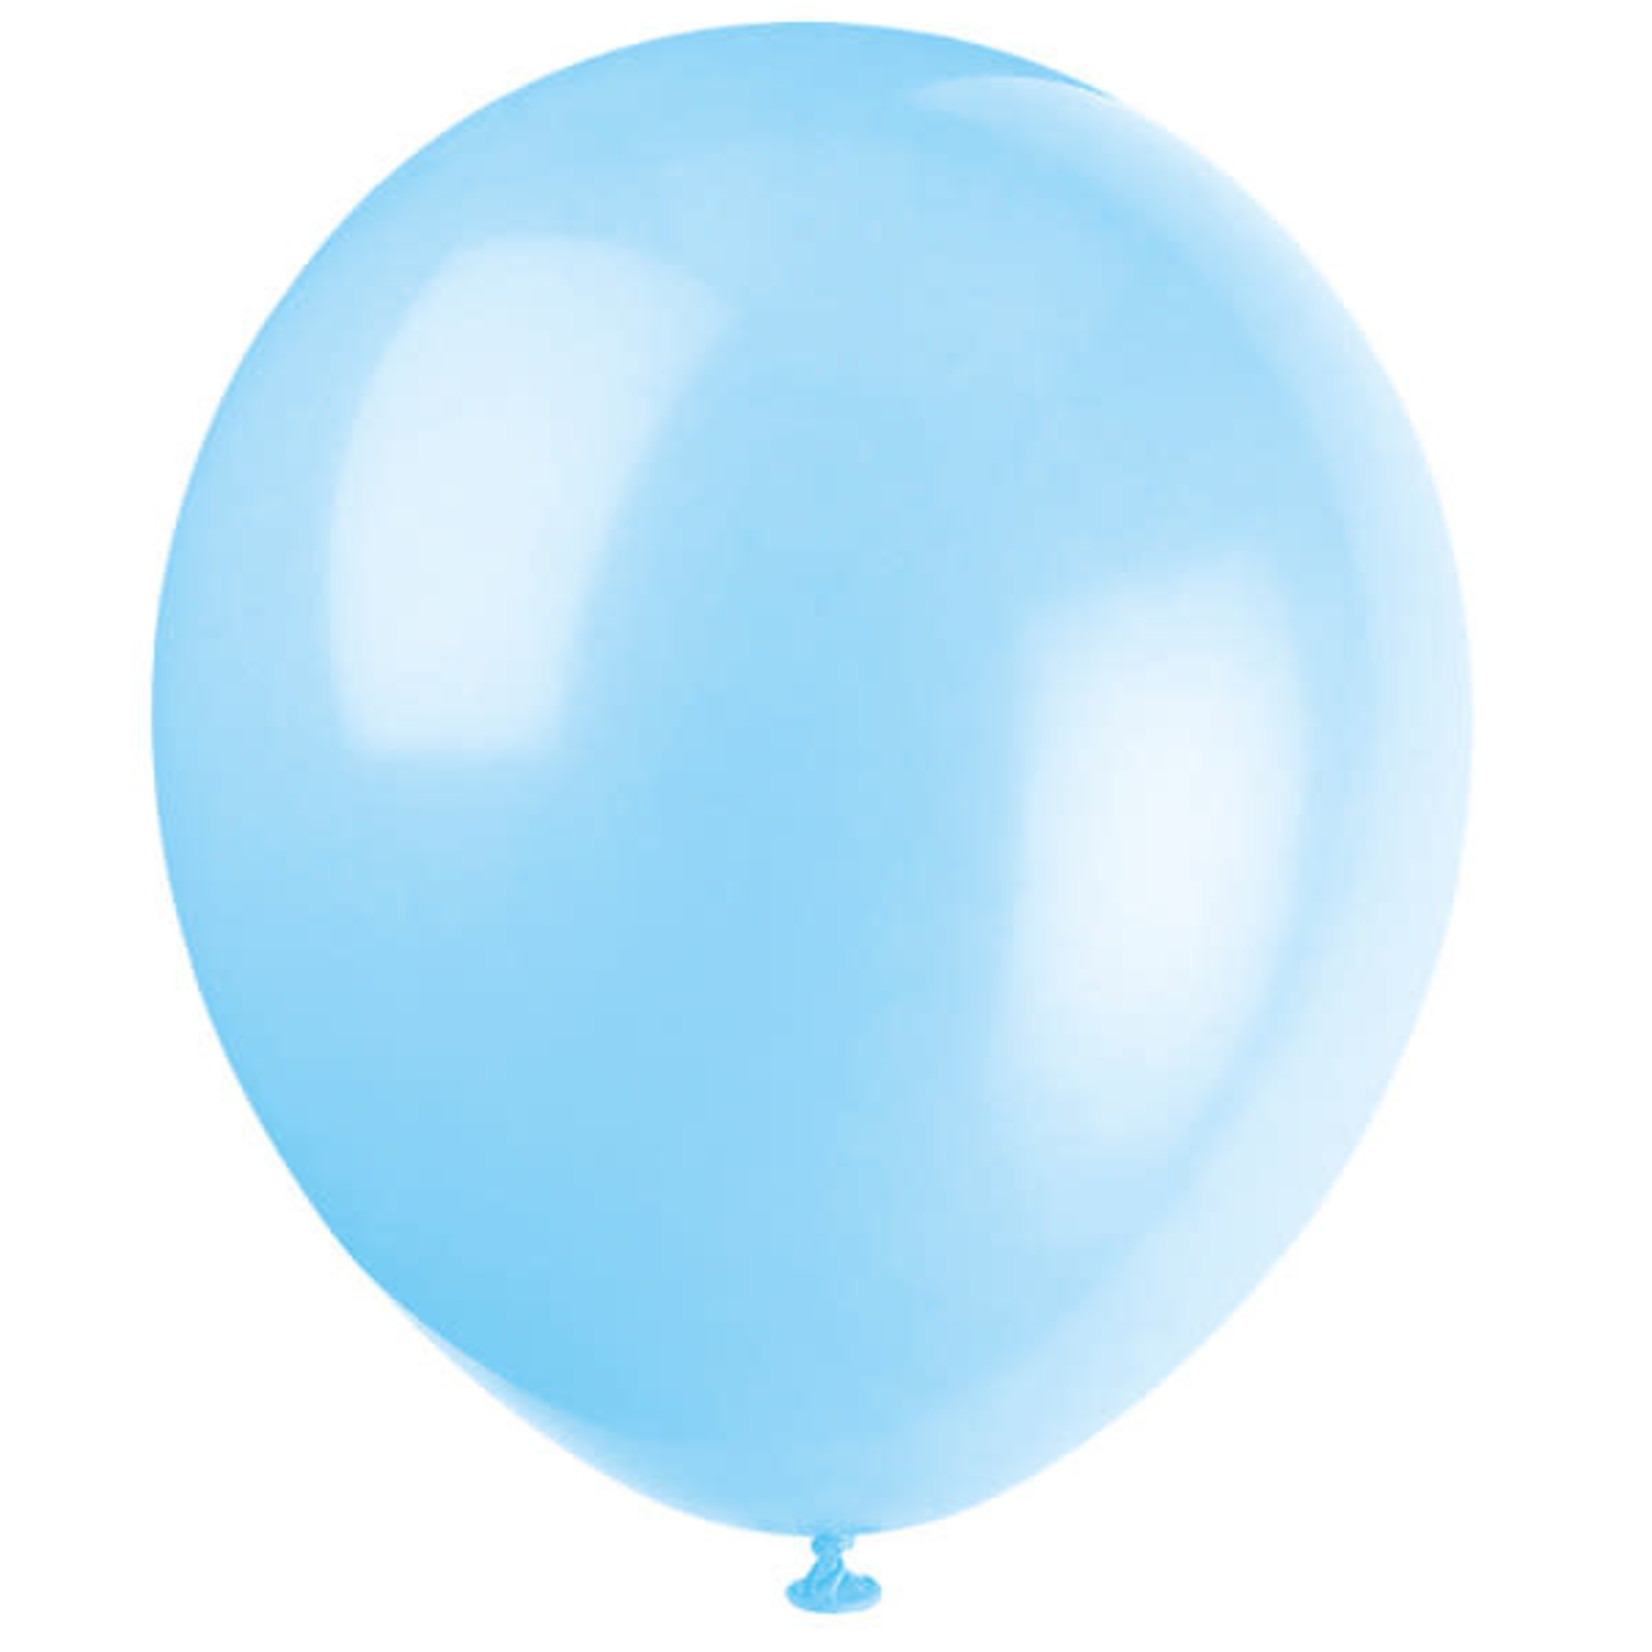 72  12"" Balloons - Baby Blue, reg $6.99